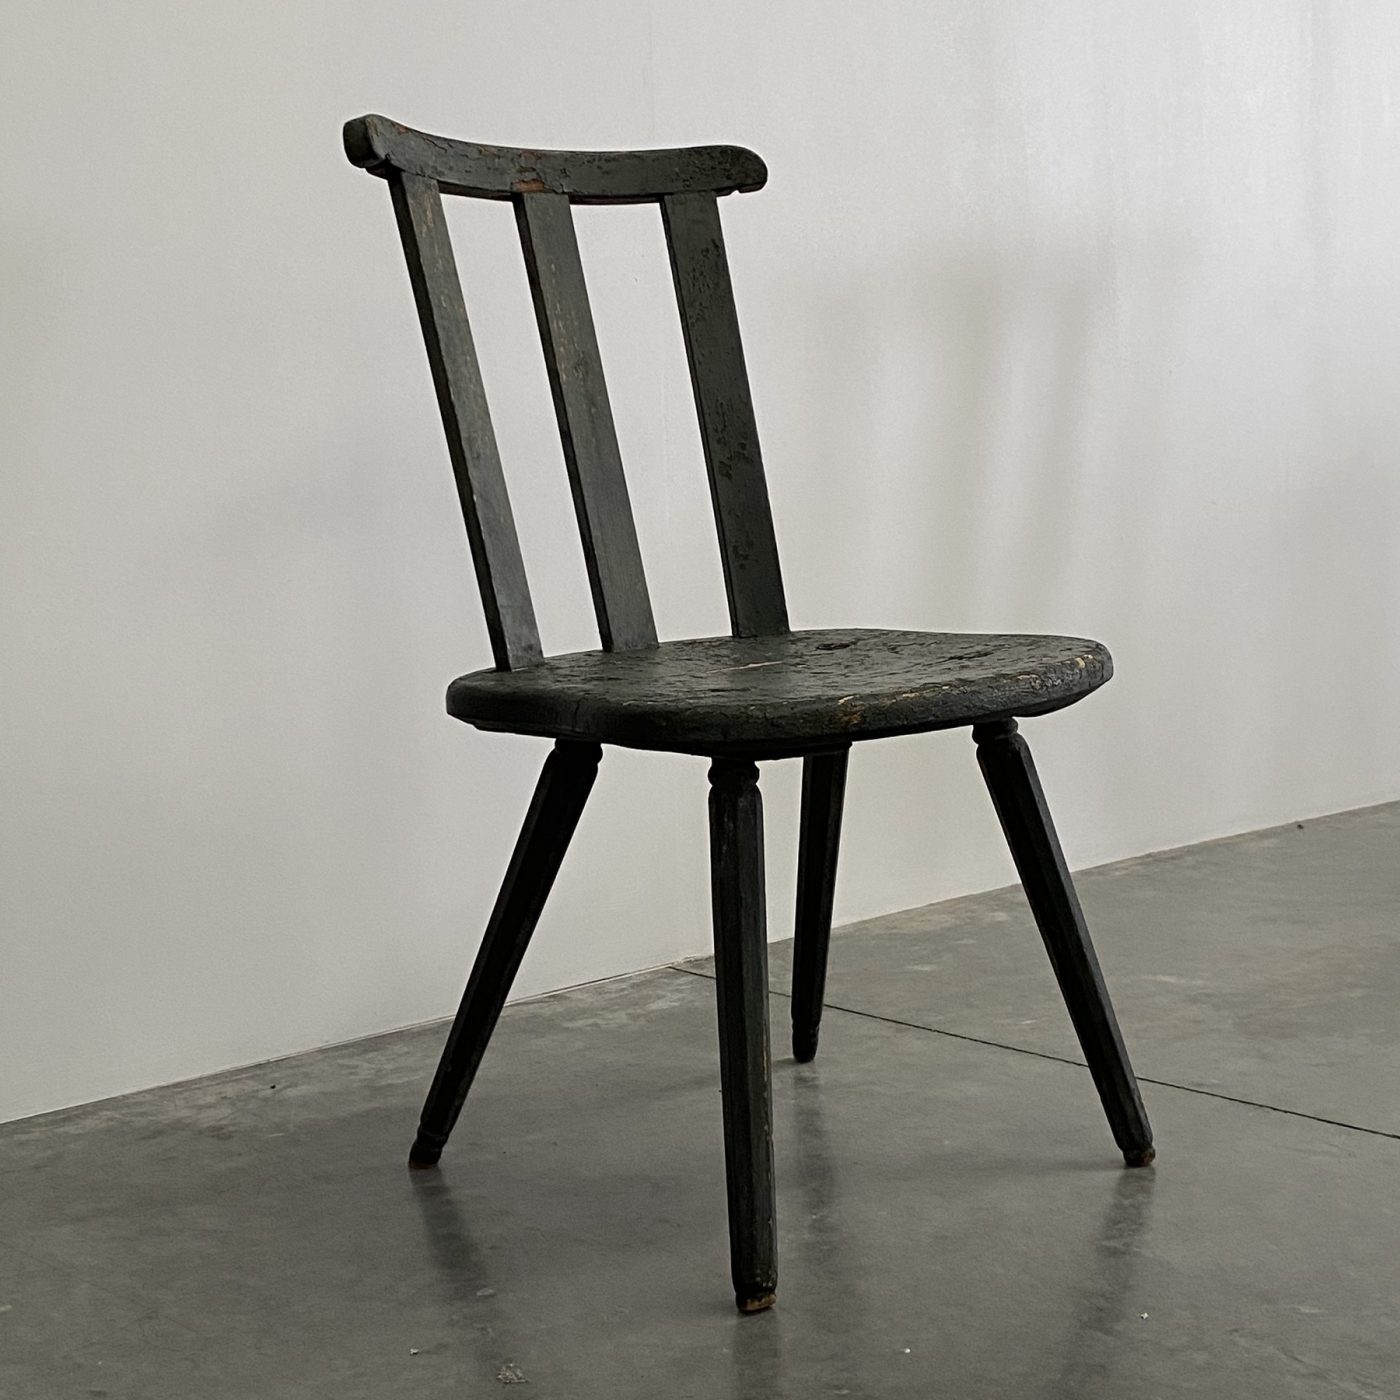 objet-vagabond-painted-chairs0009